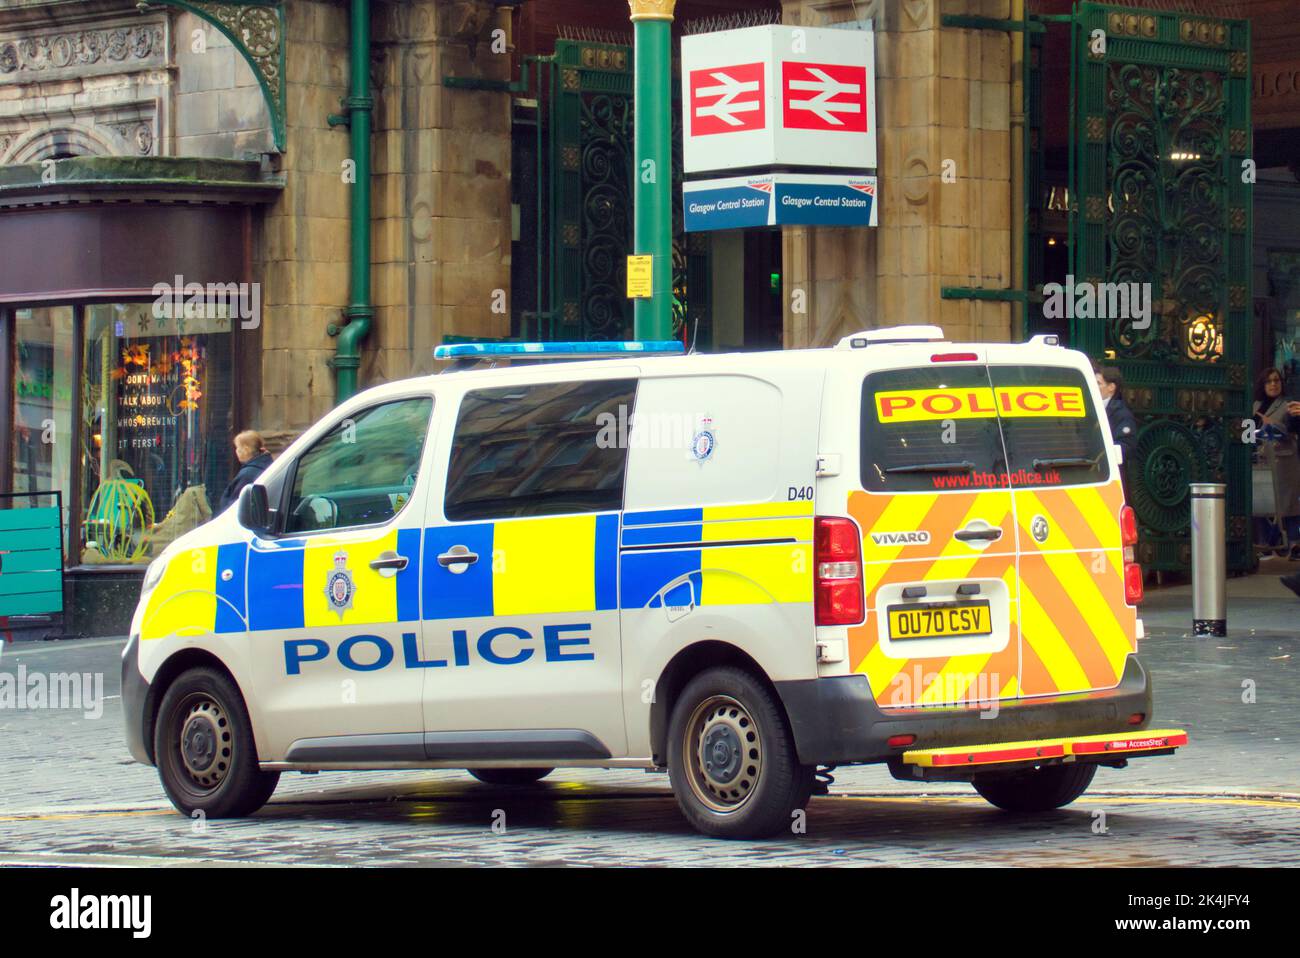 British transport police van in front of British rail central railway station sign Glasgow, Scotland, UK Stock Photo